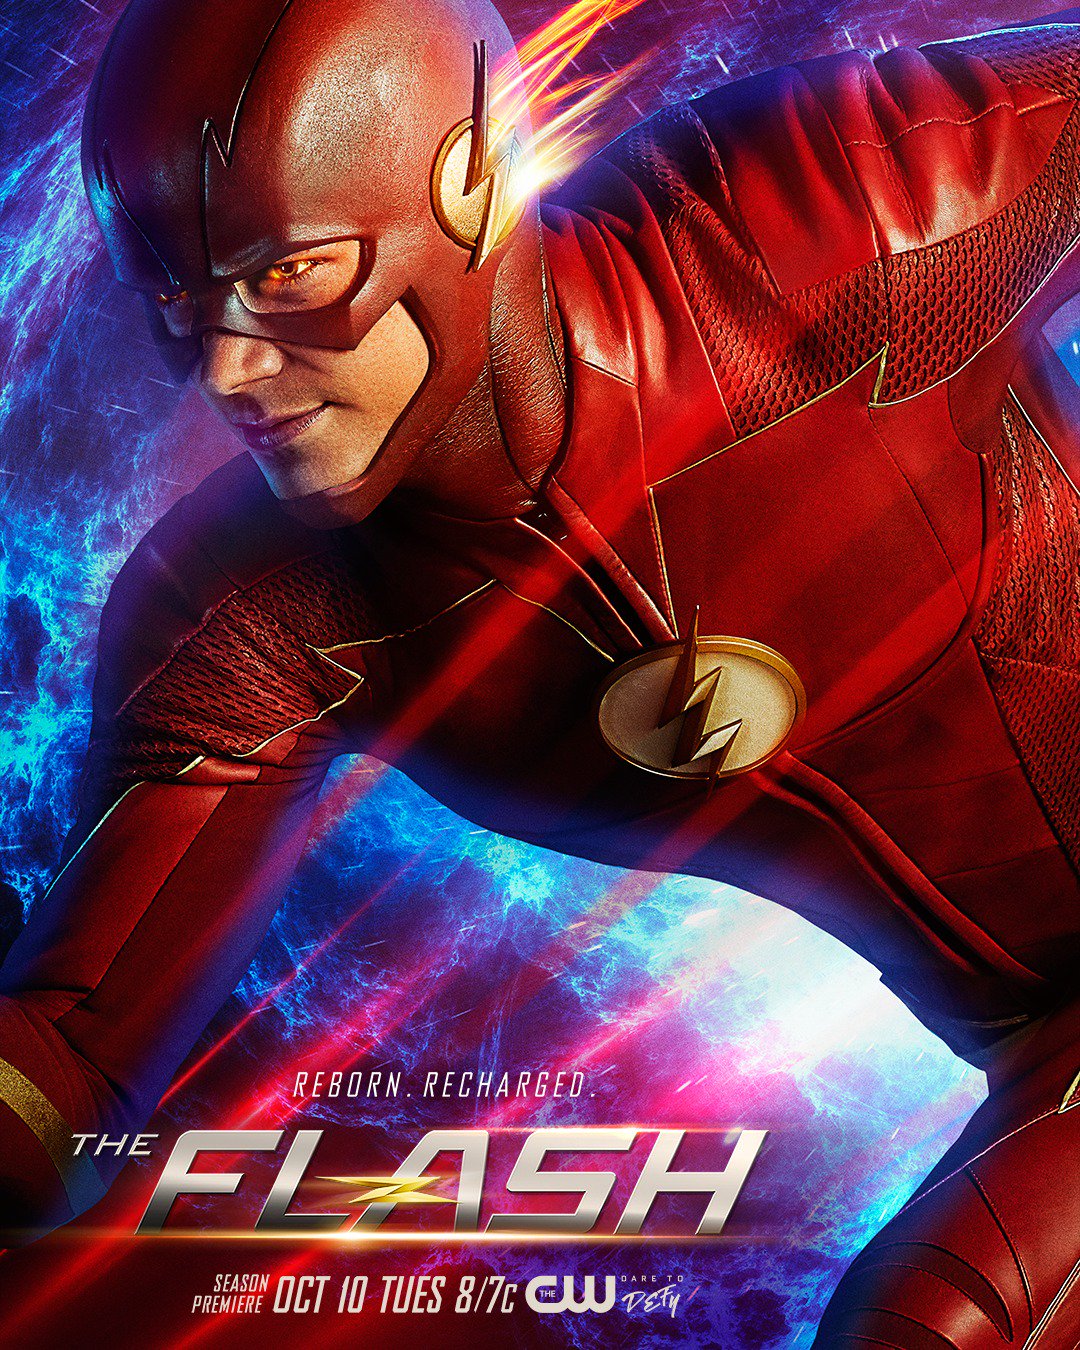 The Flash Season 4 - DC Comics News